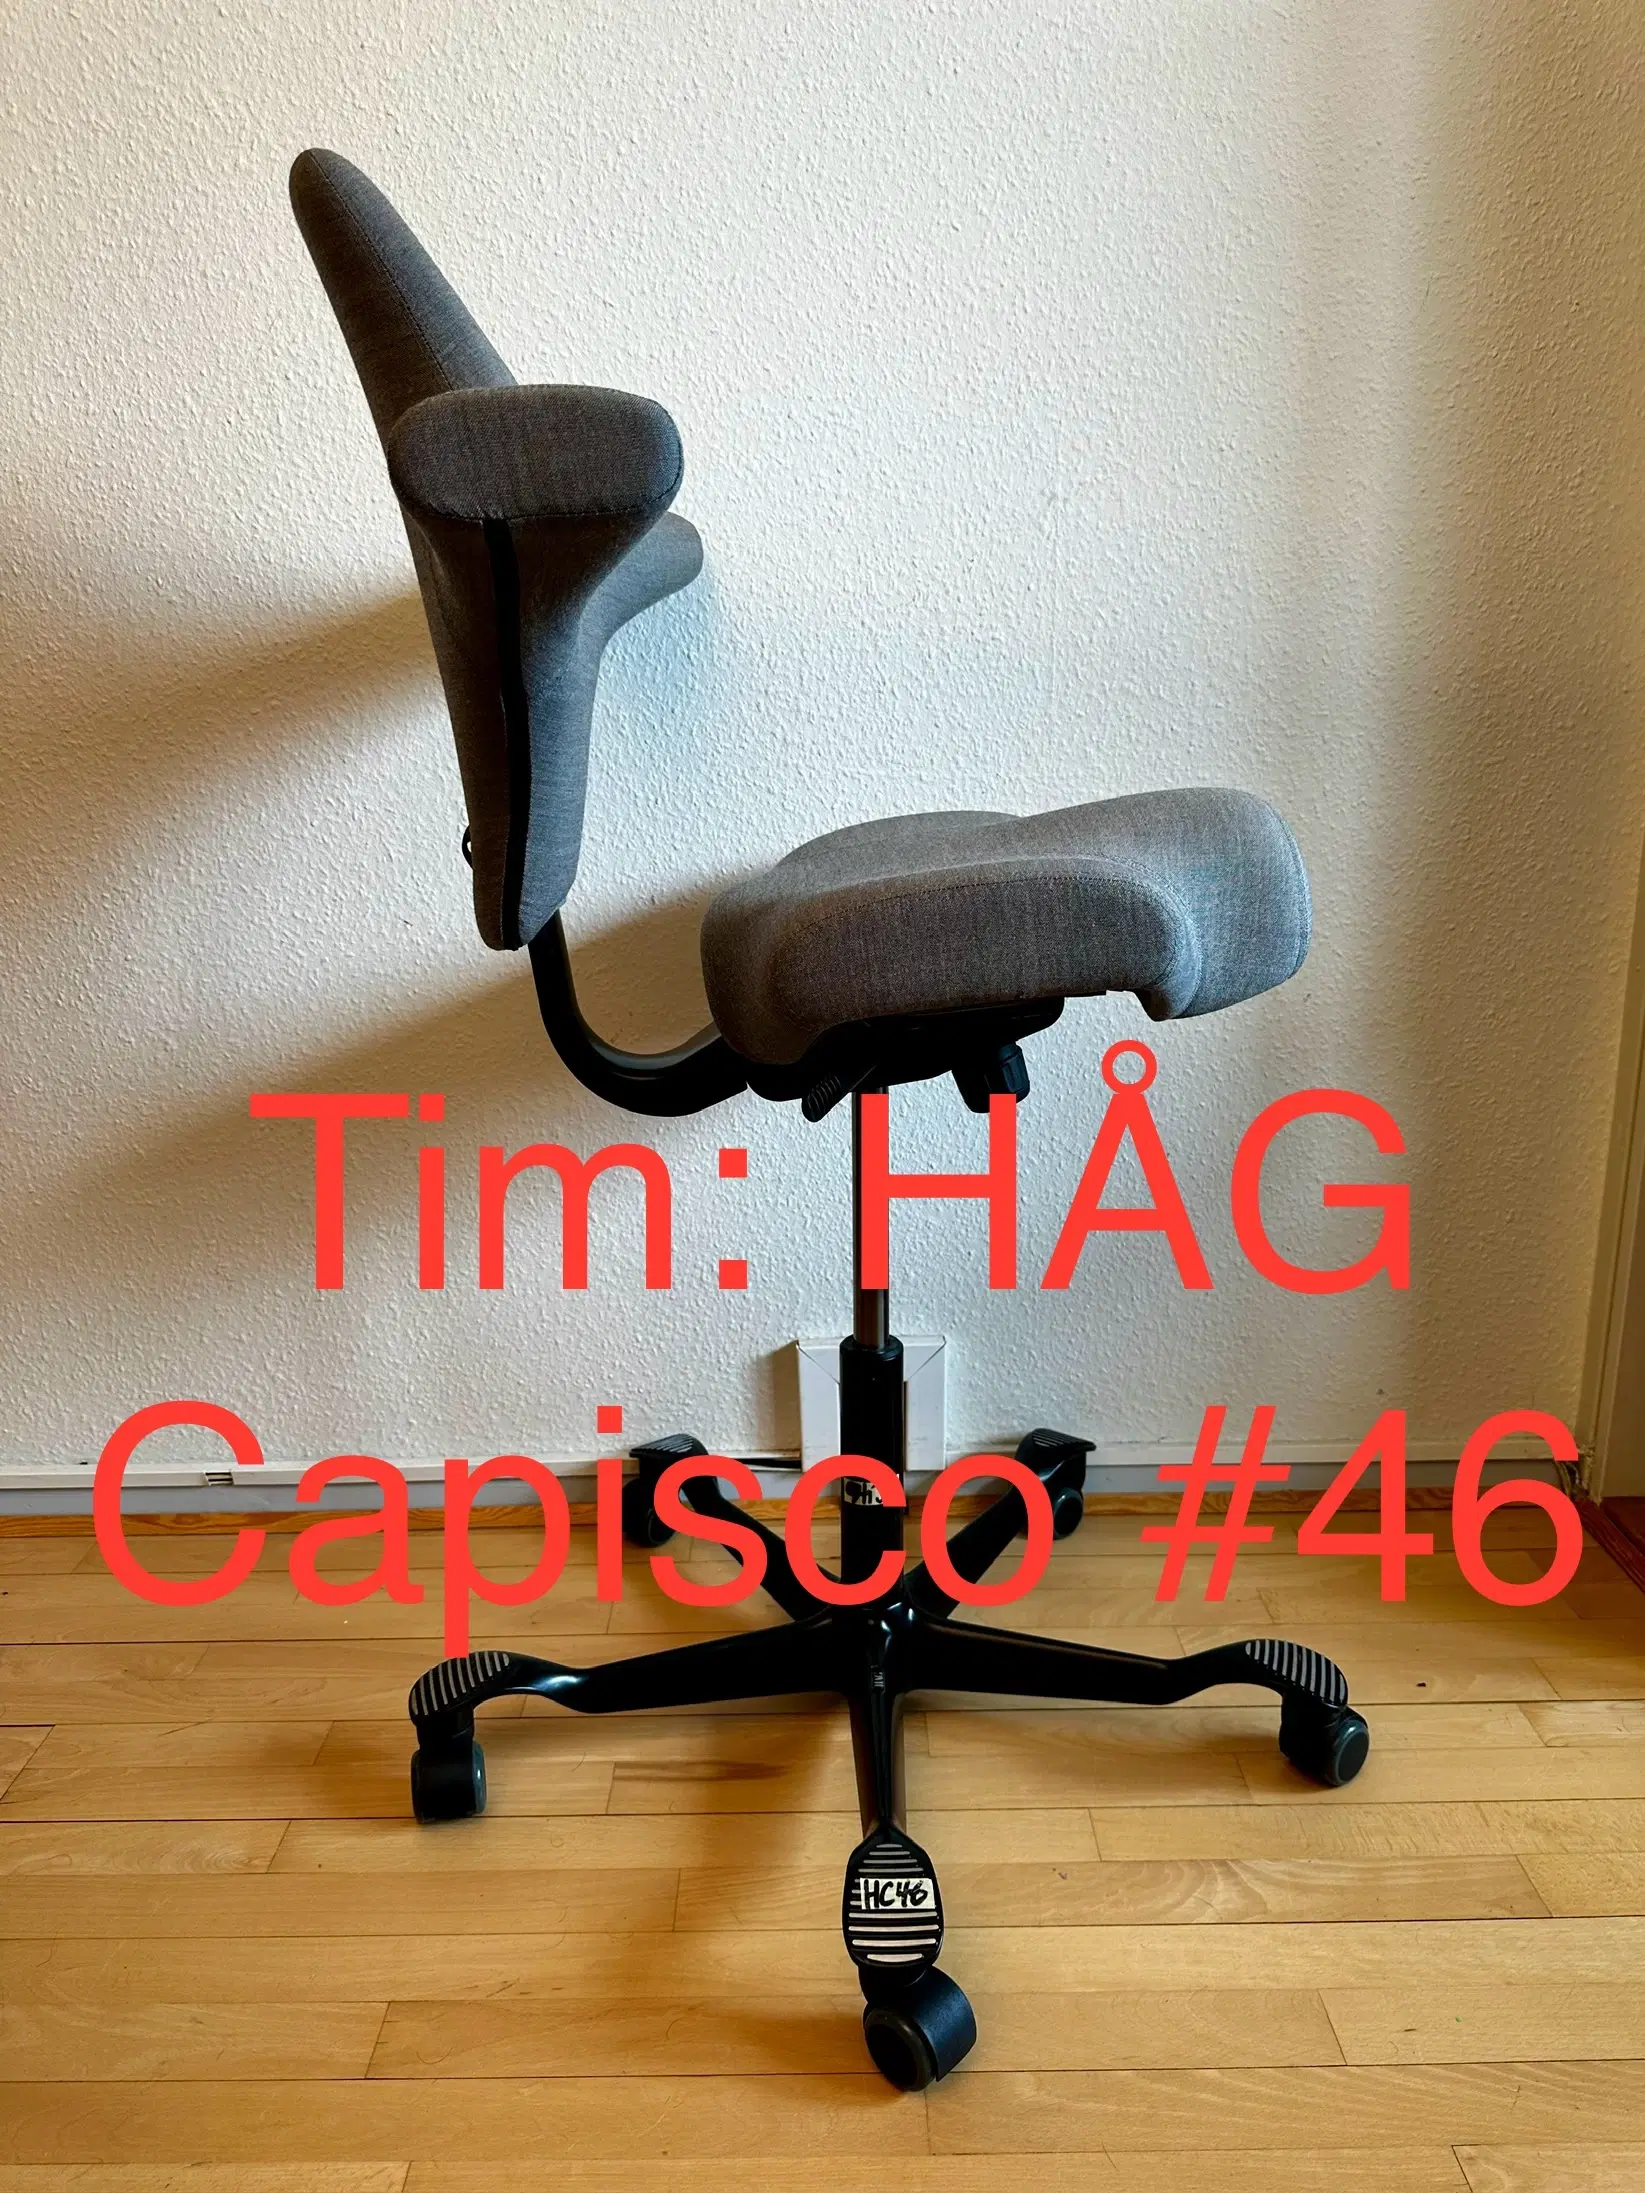 HÅG Capisco 8106